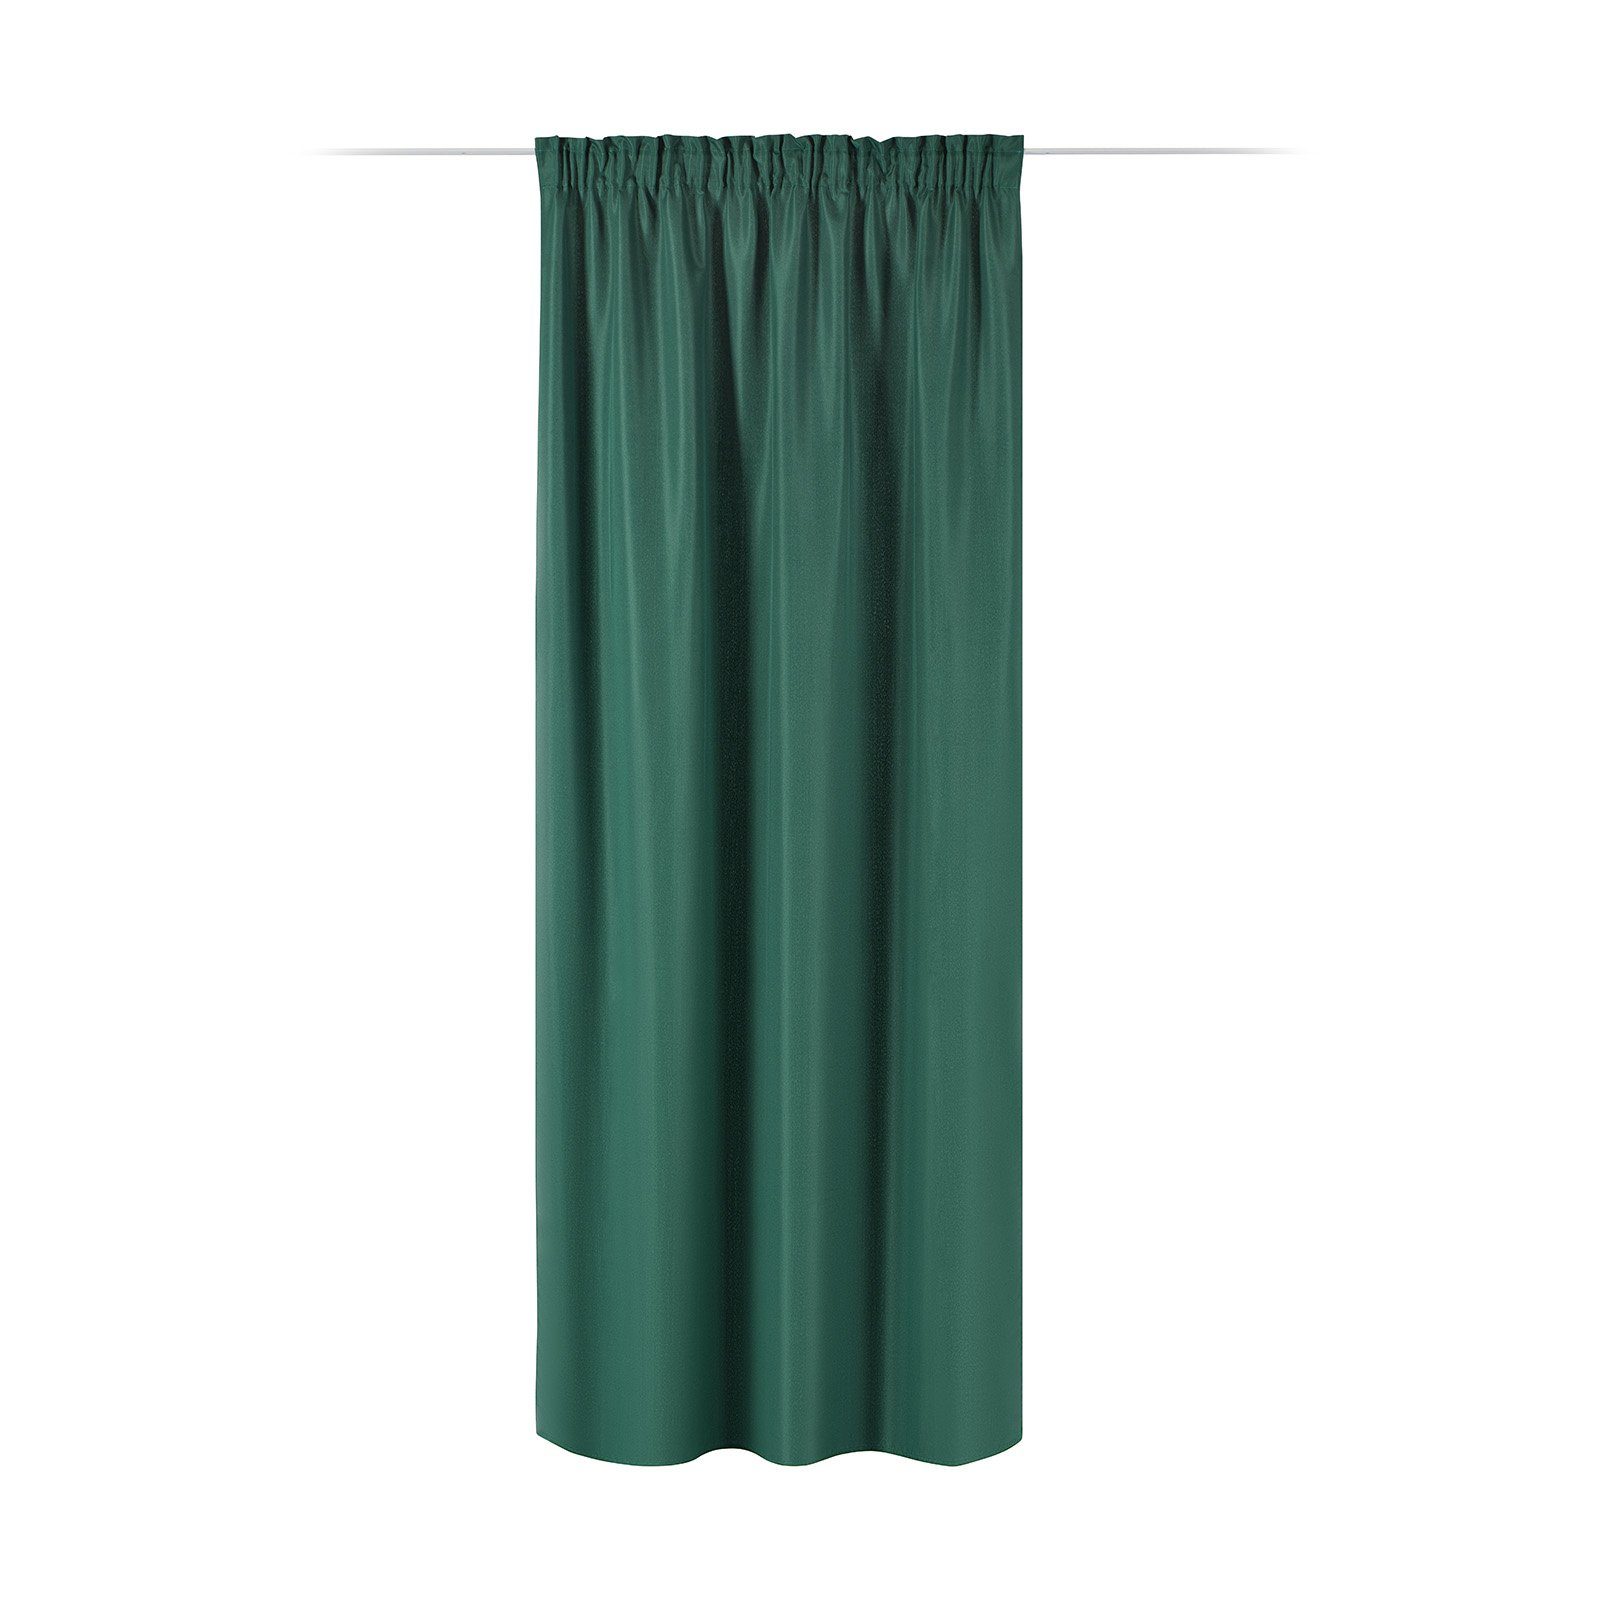 Vorhang Blickdichter Vorhang 140x250cm, grün, (1 Polyester, St) Kräuselband, JEMIDI